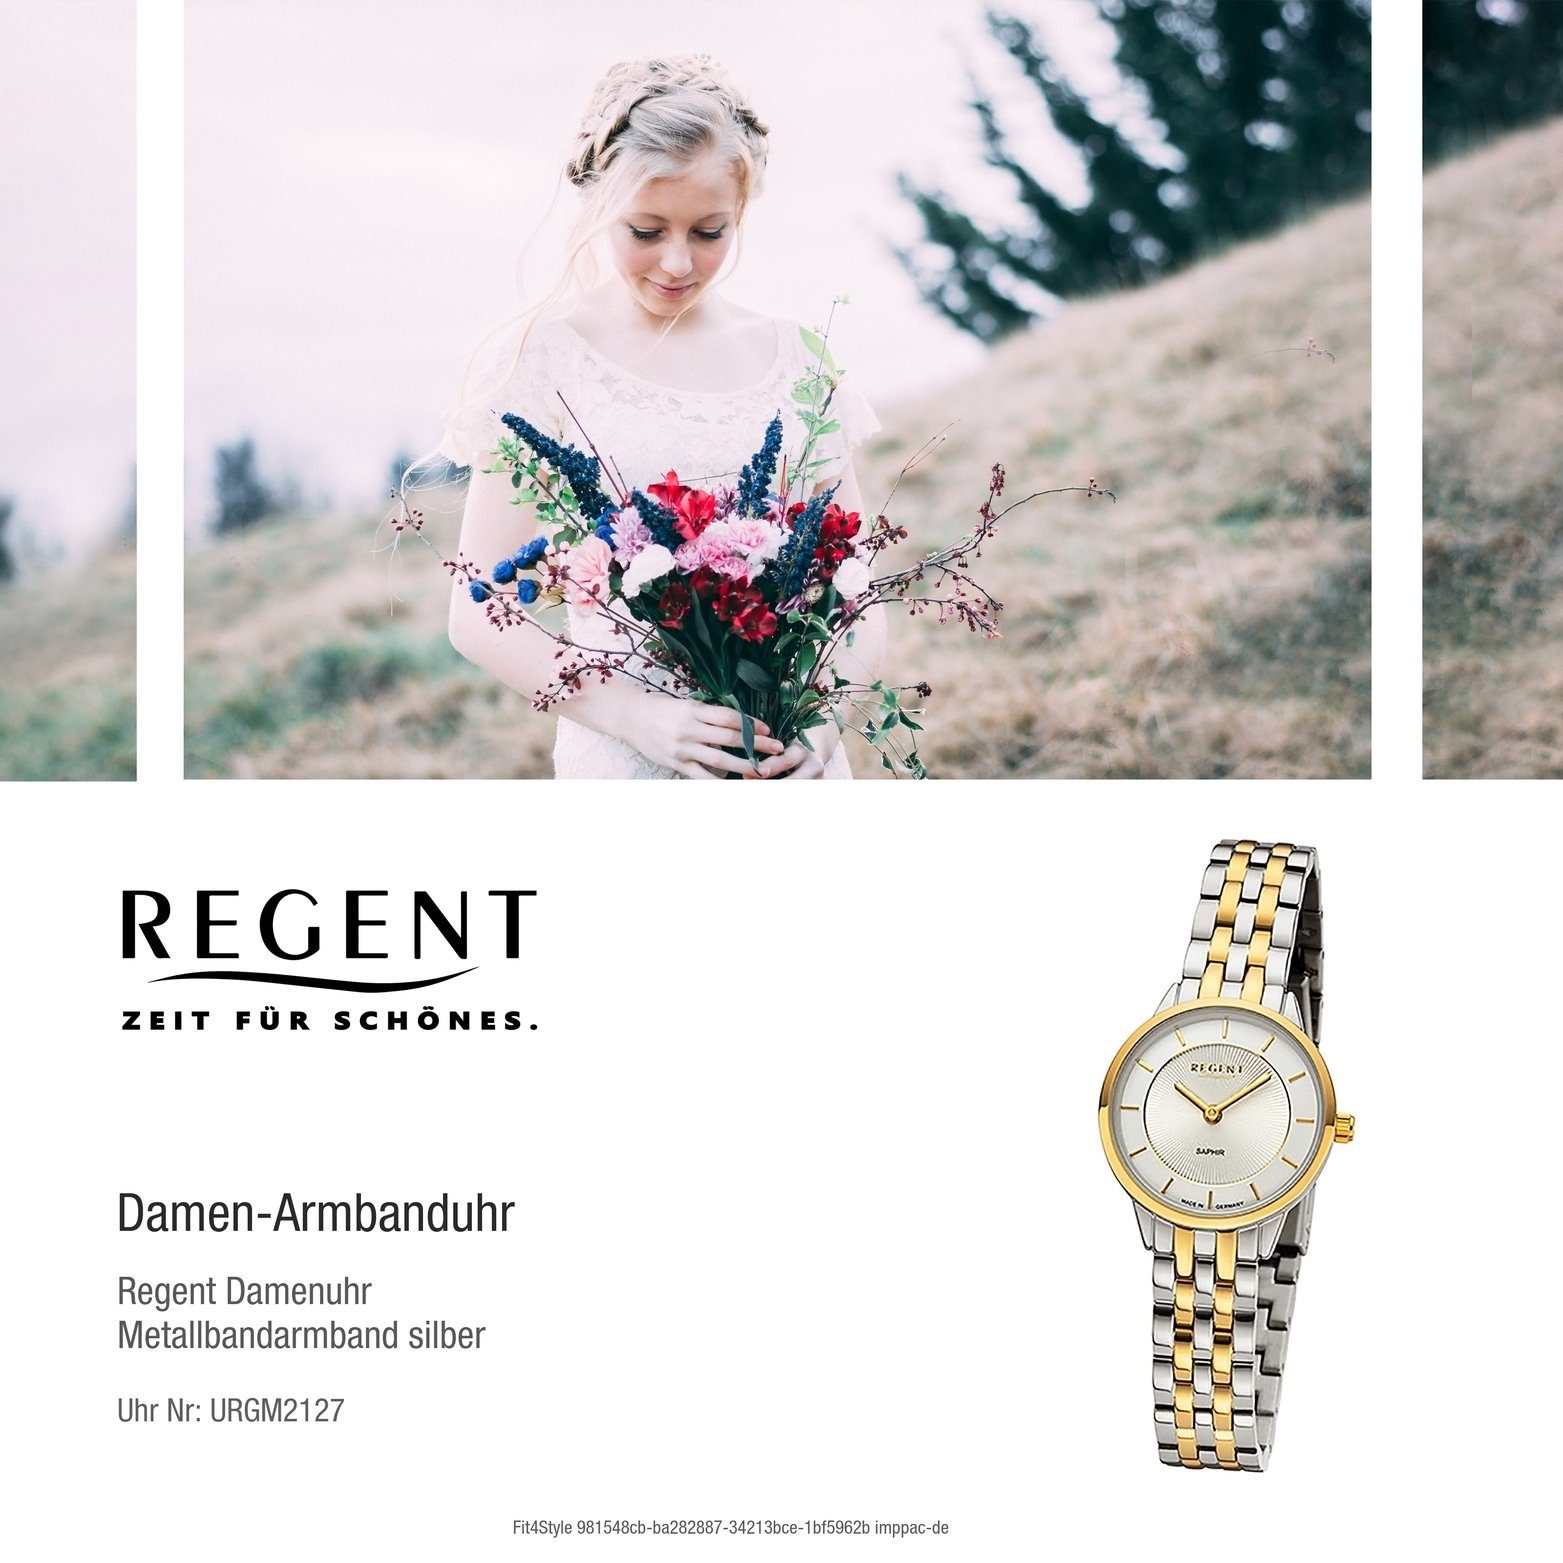 Gehäuse, Quarzuhr Damen klein Armbanduhr silber, Metallbandarmband Analog, Regent rundes Damenuhr gold, Regent (27mm)